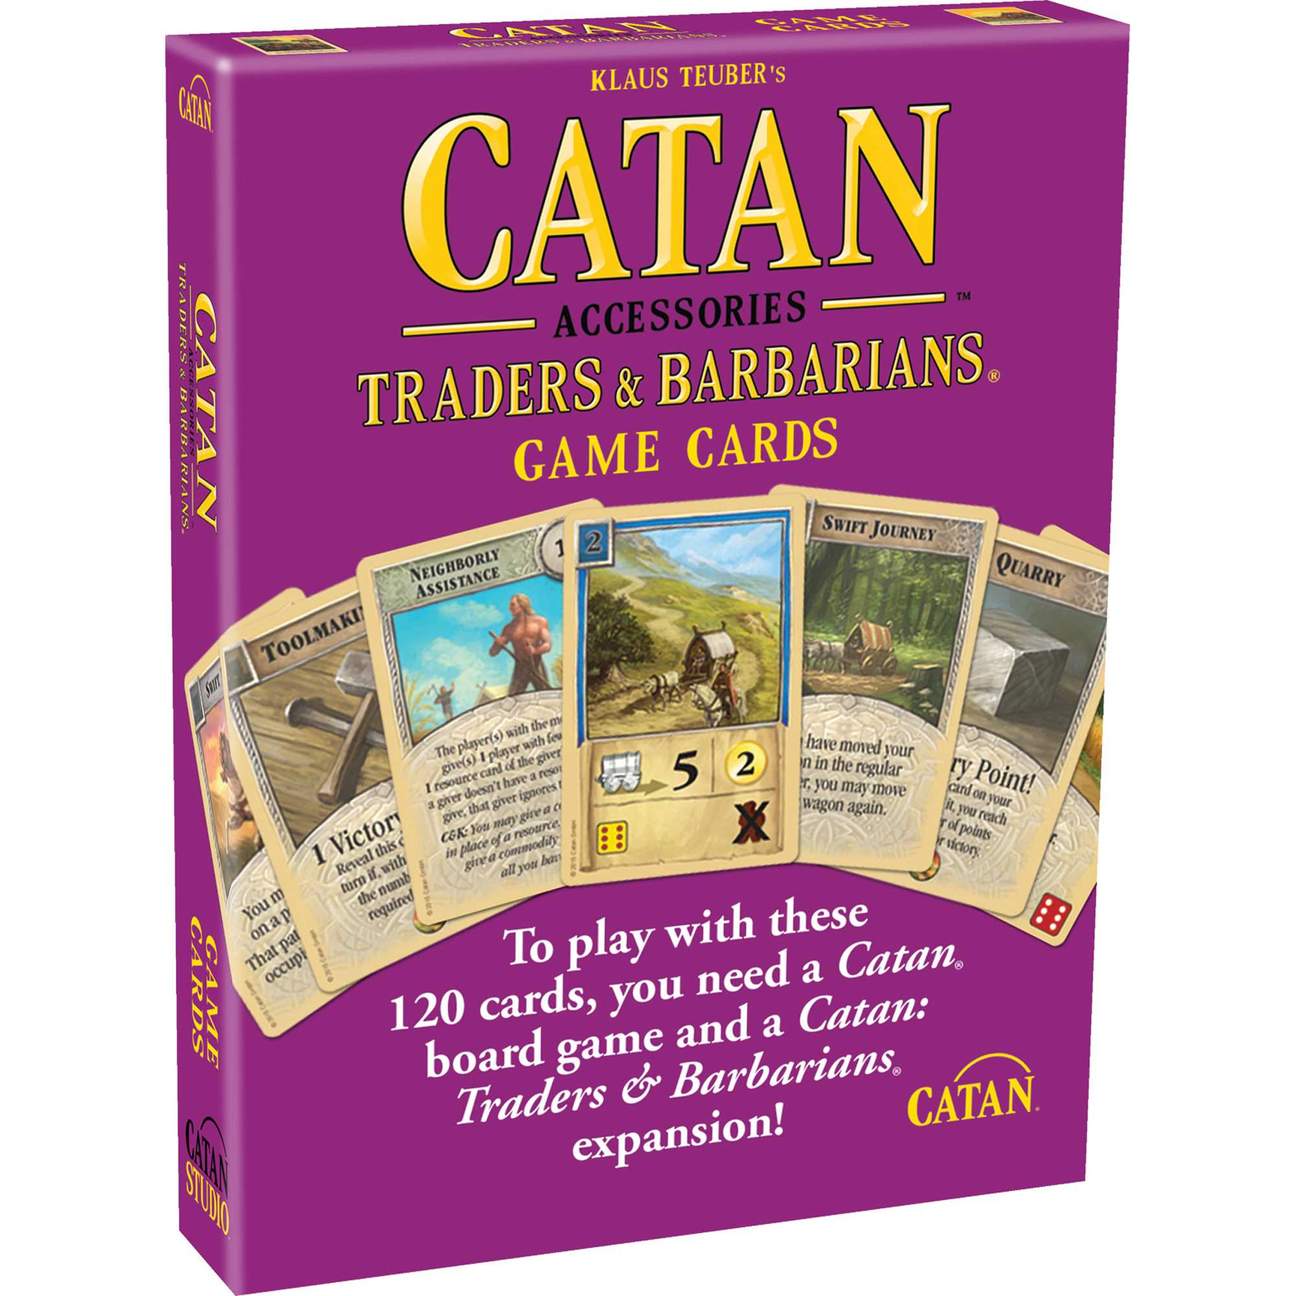 Catan Traders & Barbarians game cards